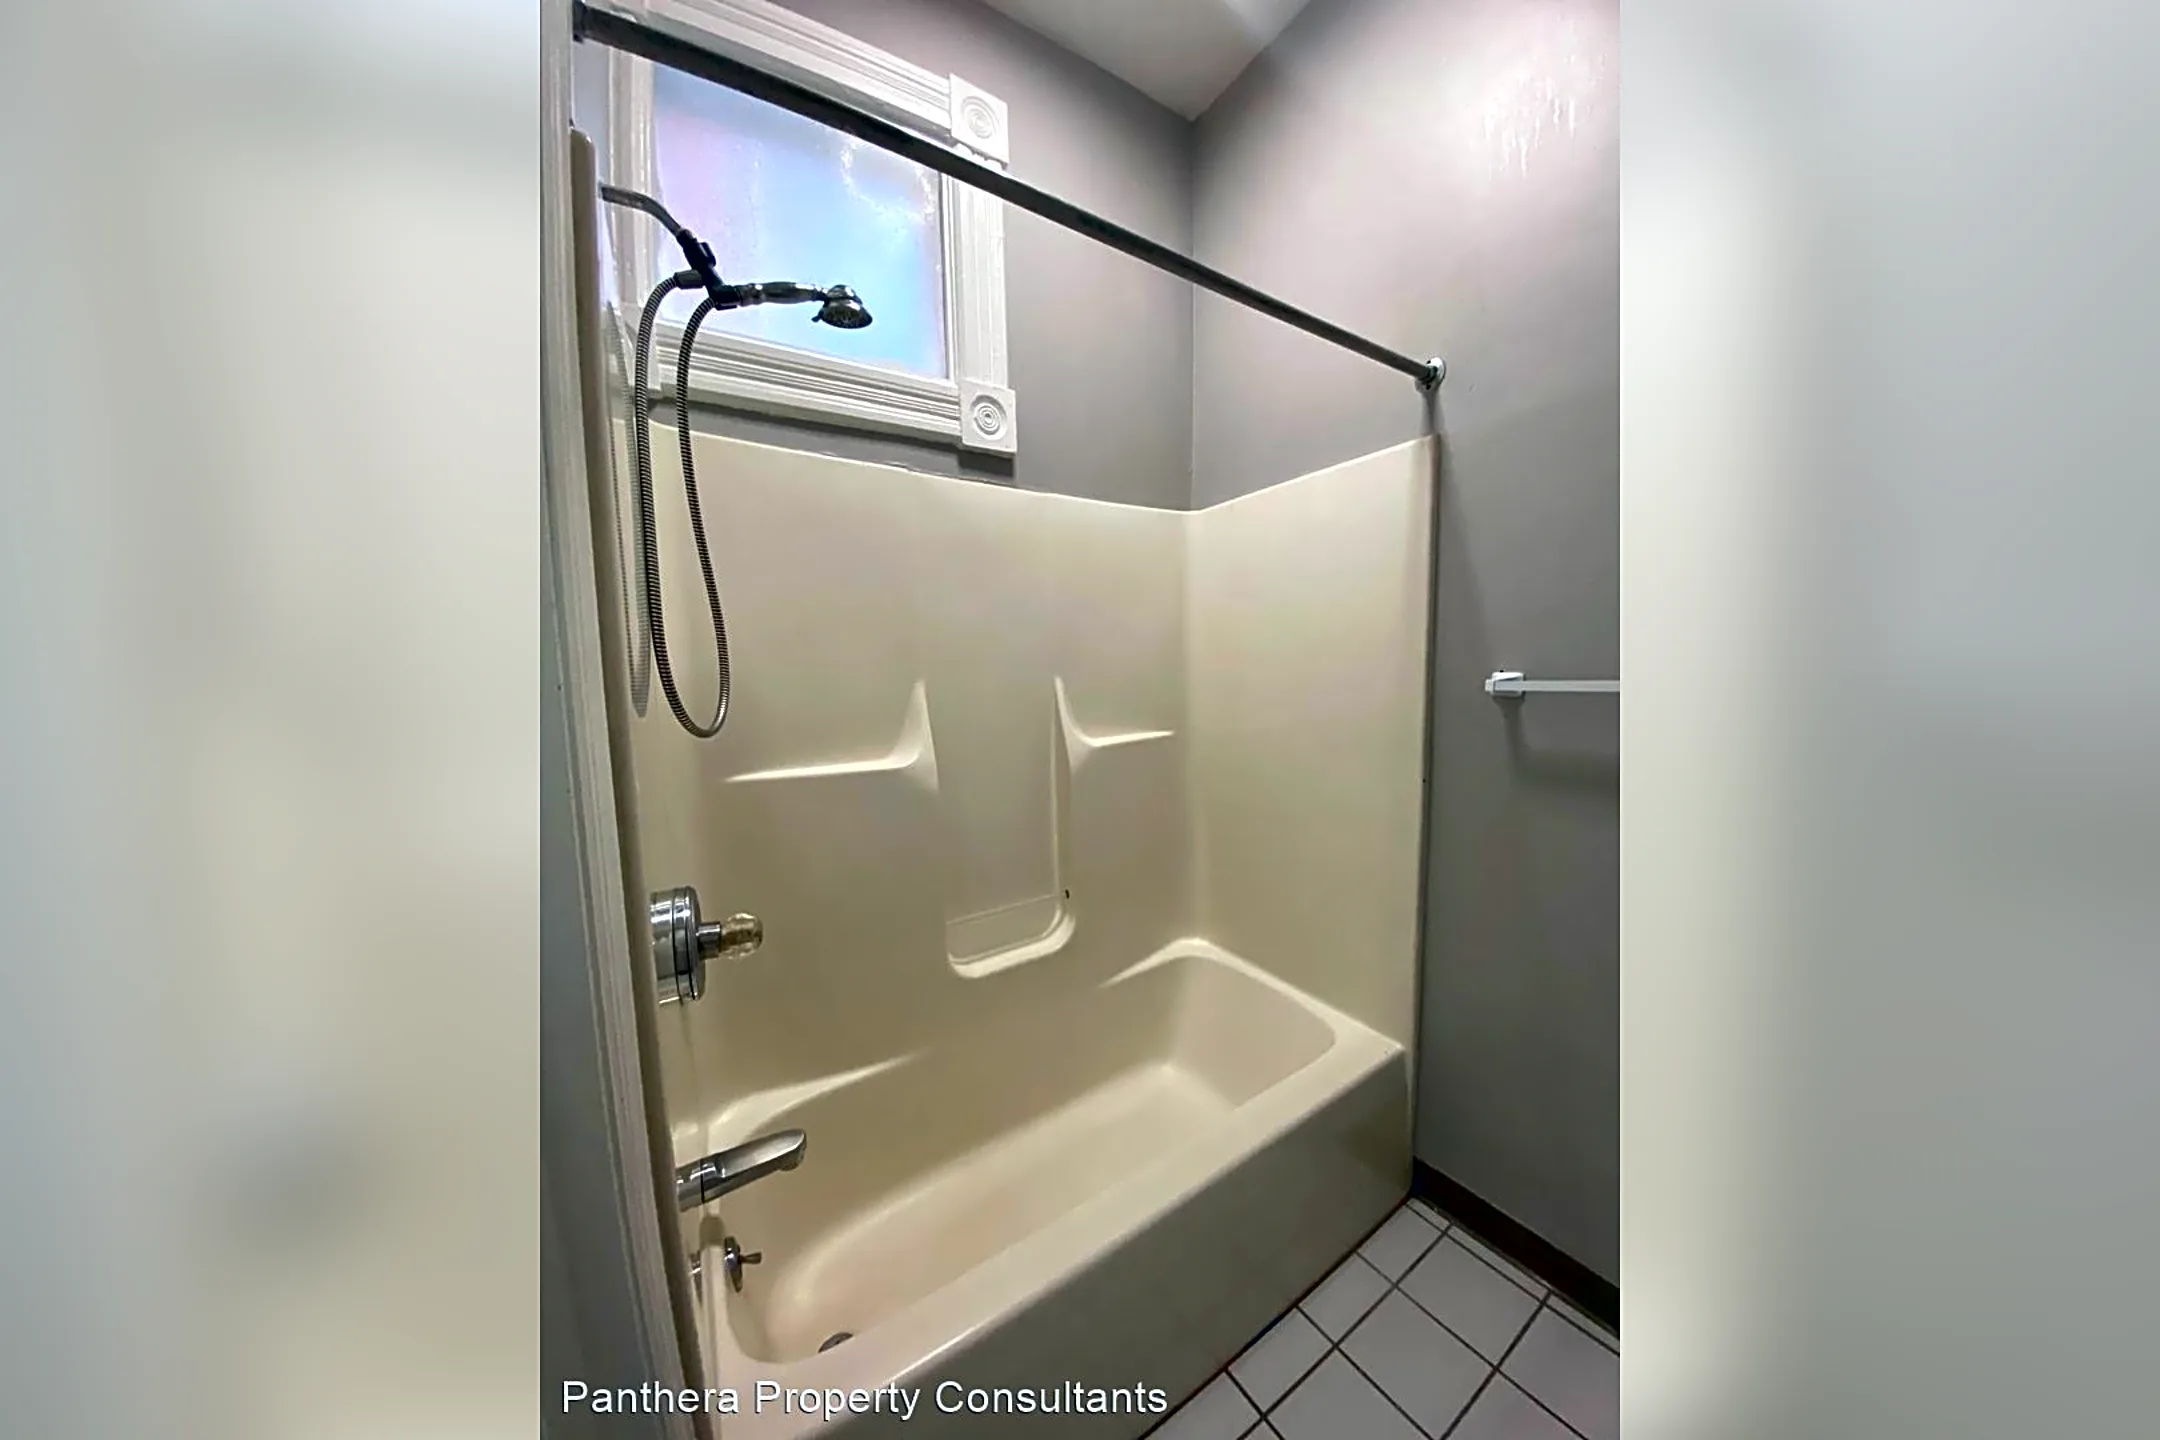 Bathroom - 400 Warner St - Cincinnati, OH